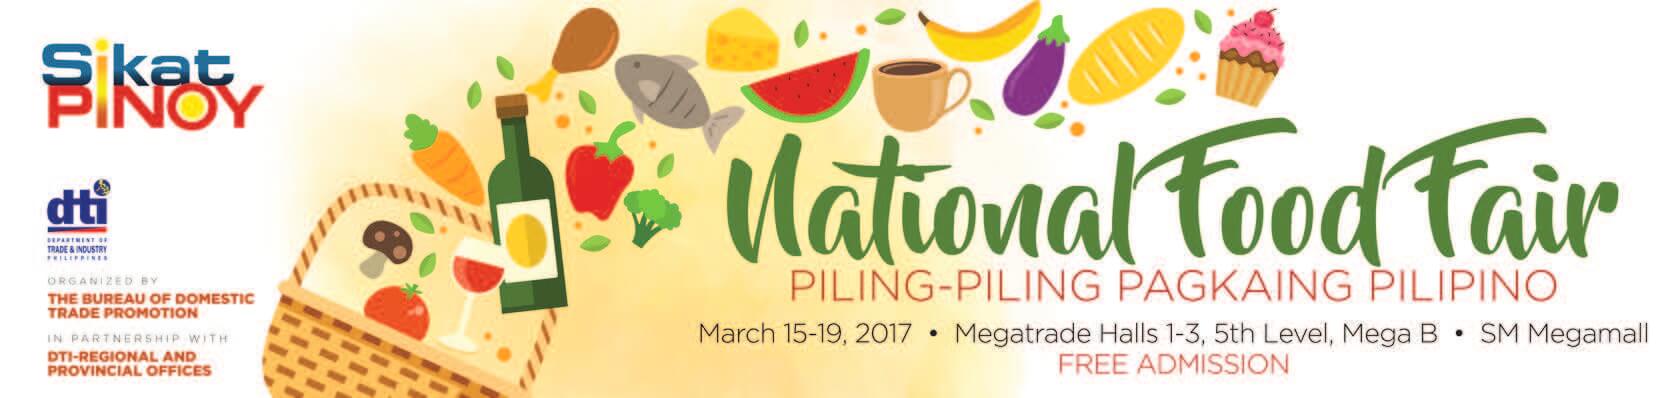 2017 Sikat Pinoy National Food Fair pic 2